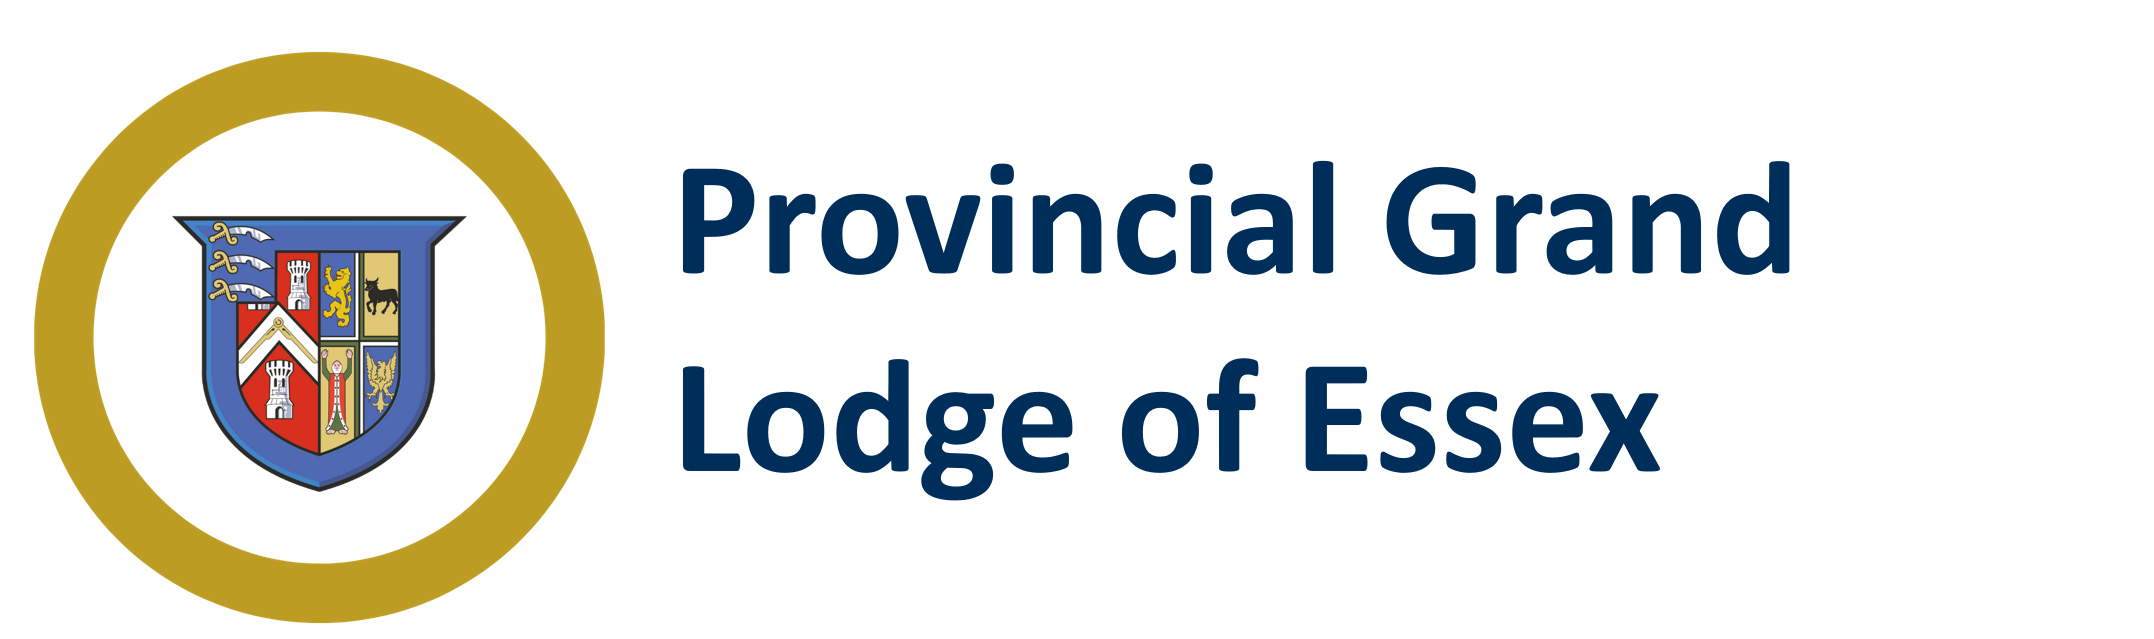 Provincial Grand Lodge of Essex